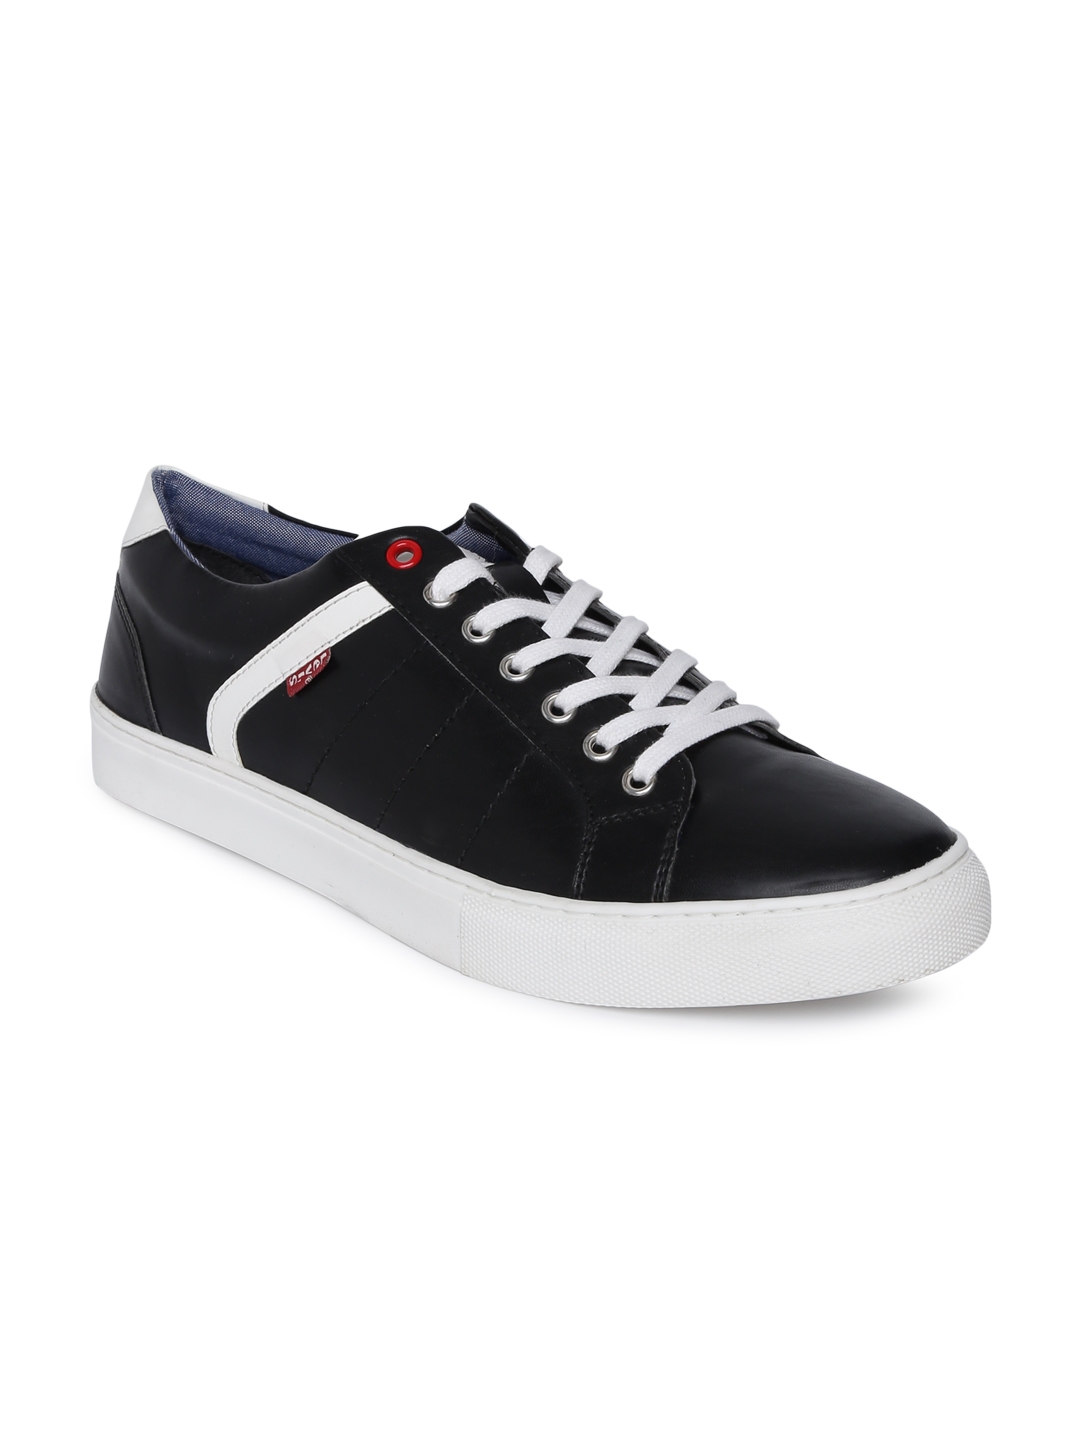 Buy Levis Men Black Sneakers - Casual Shoes for Men 8858755 | Myntra